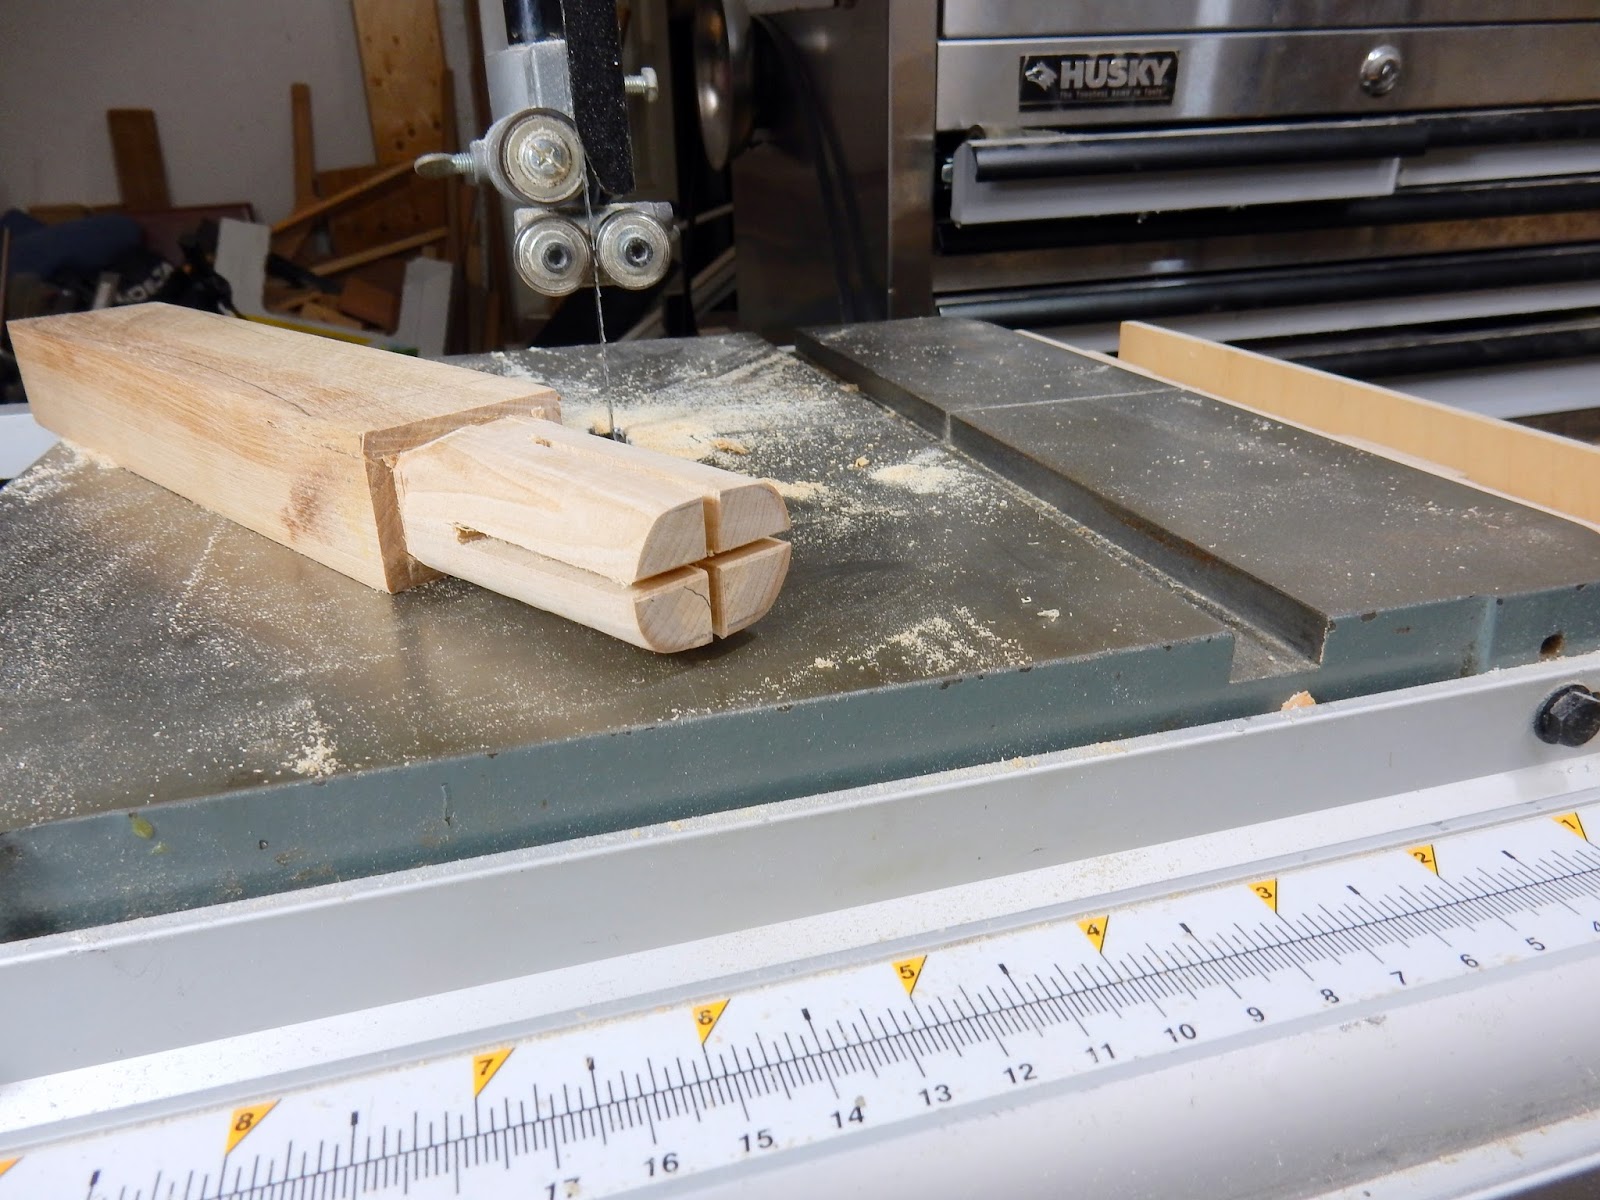 Jax Design: Make a deadblow wooden mallet